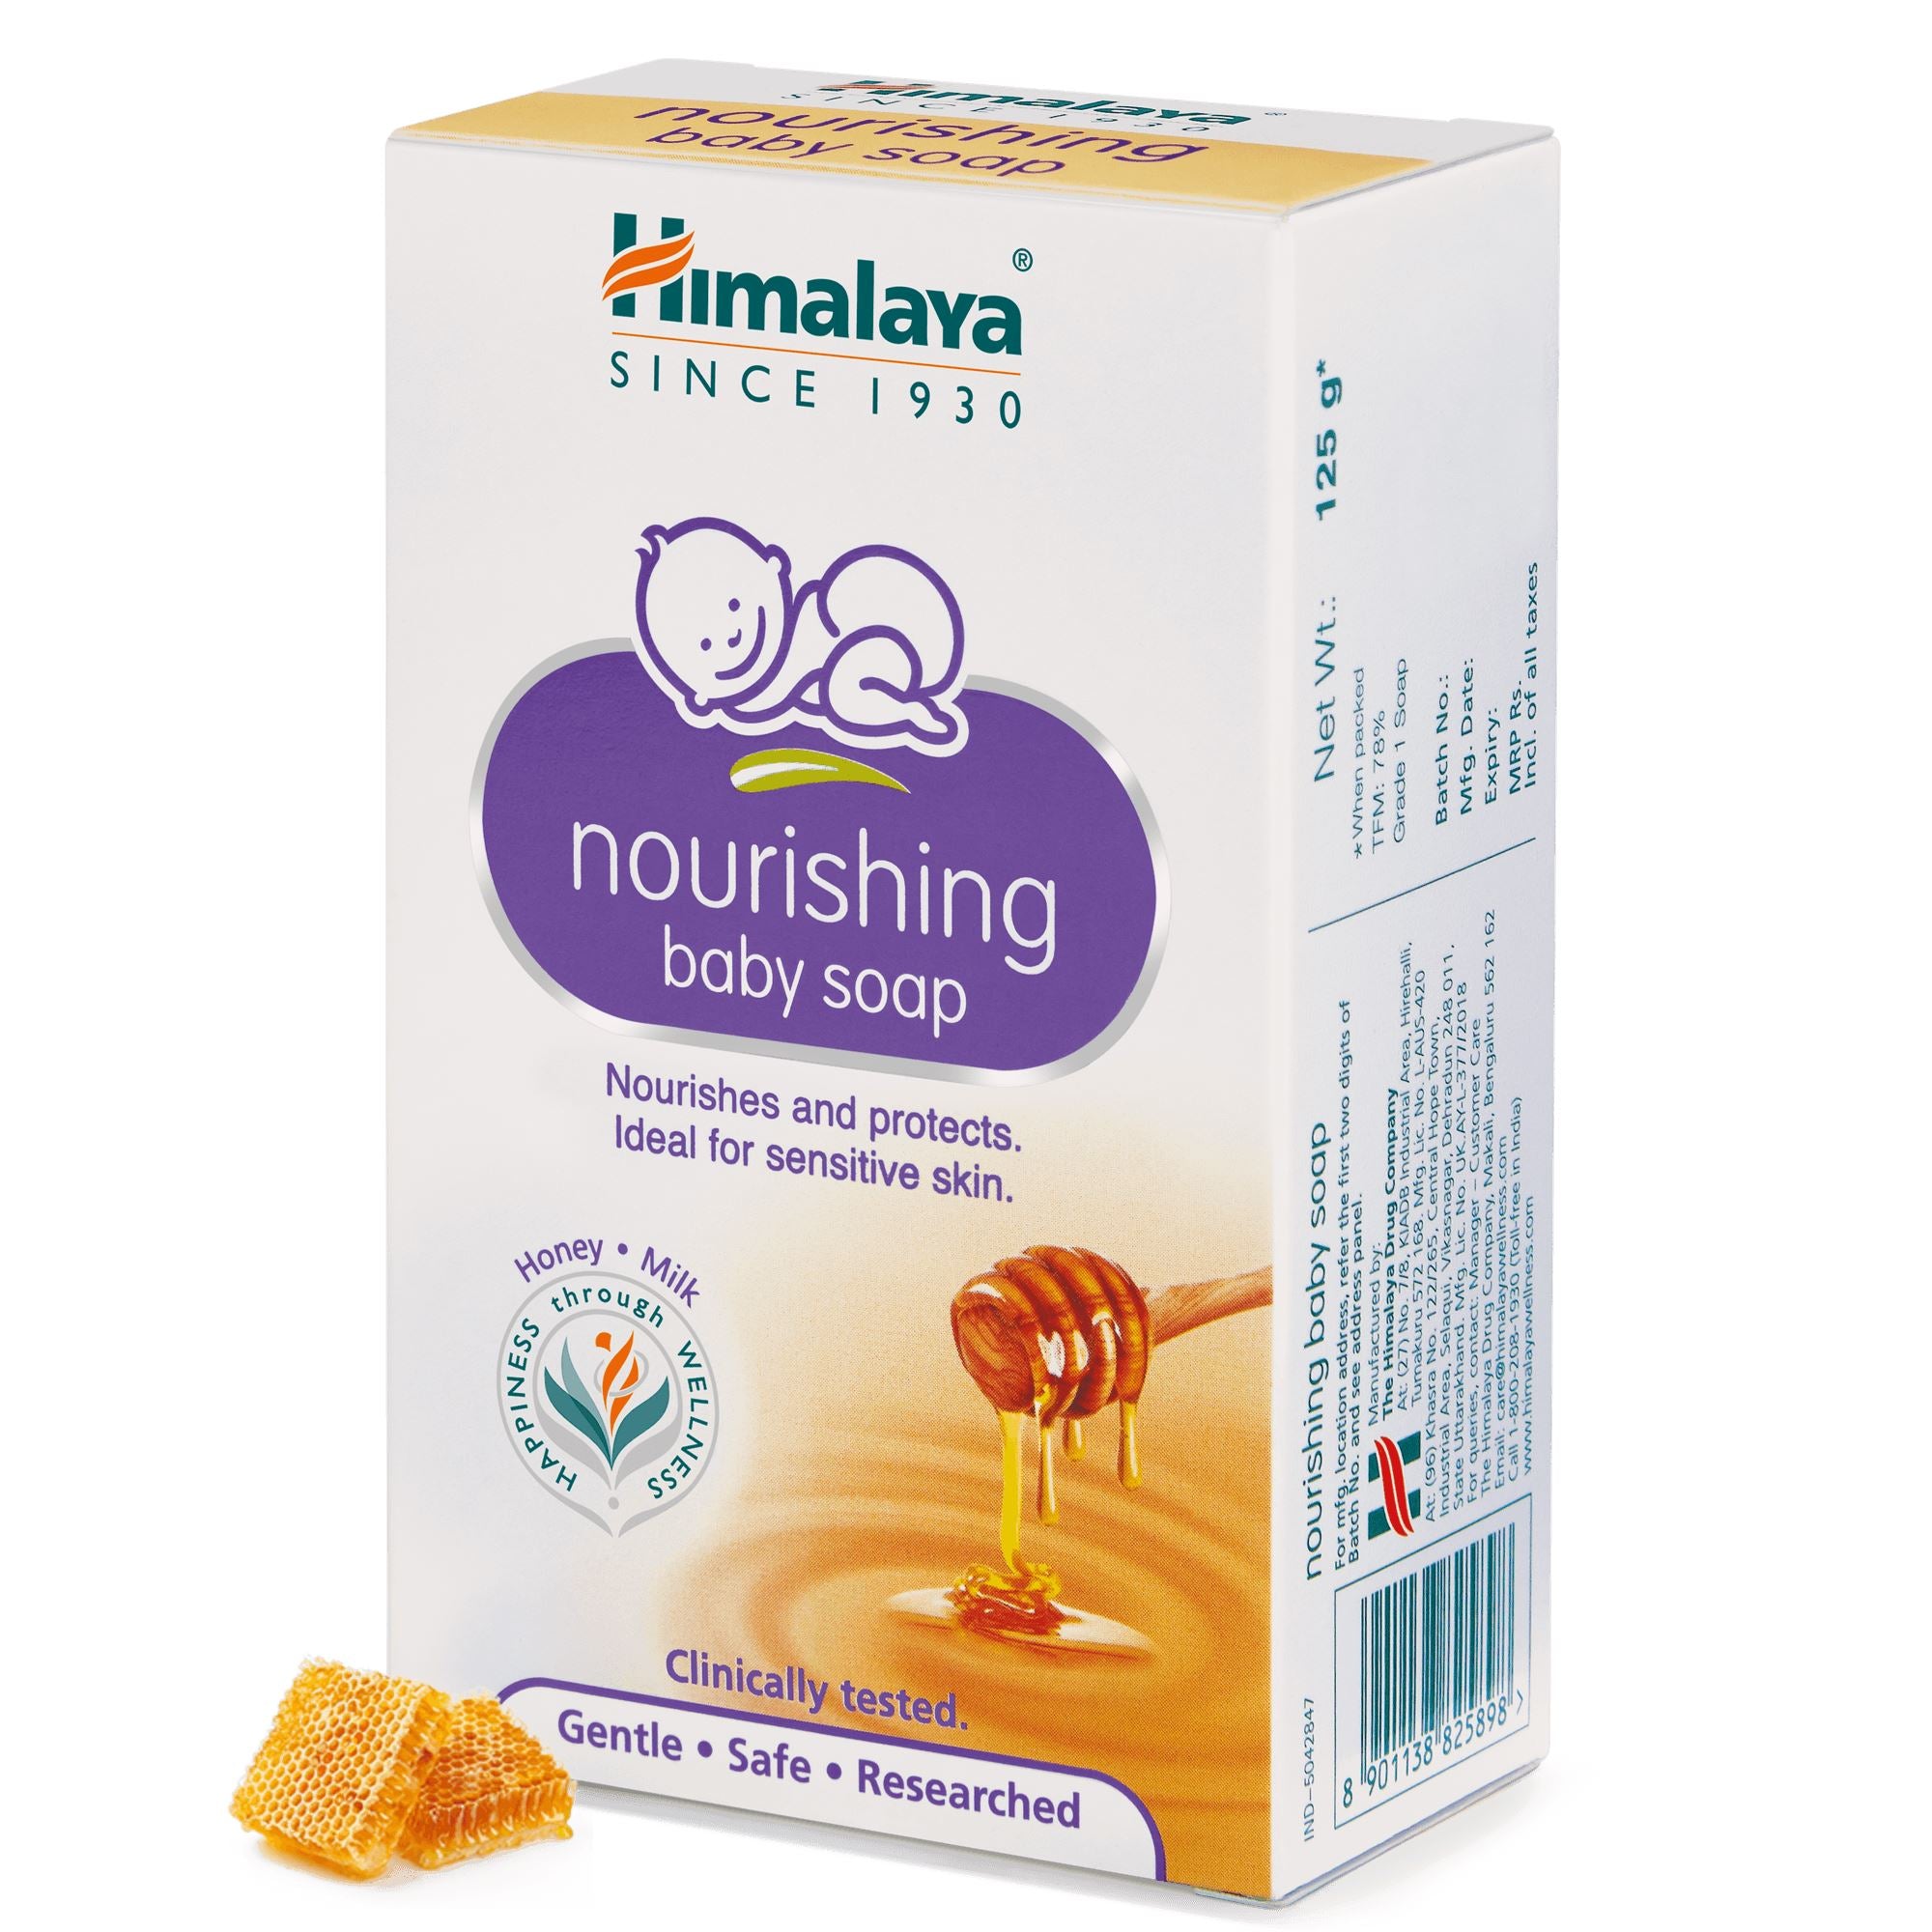 Himalaya Nourishing baby soap 125g- Gentle nourishment for baby's sensitive skin